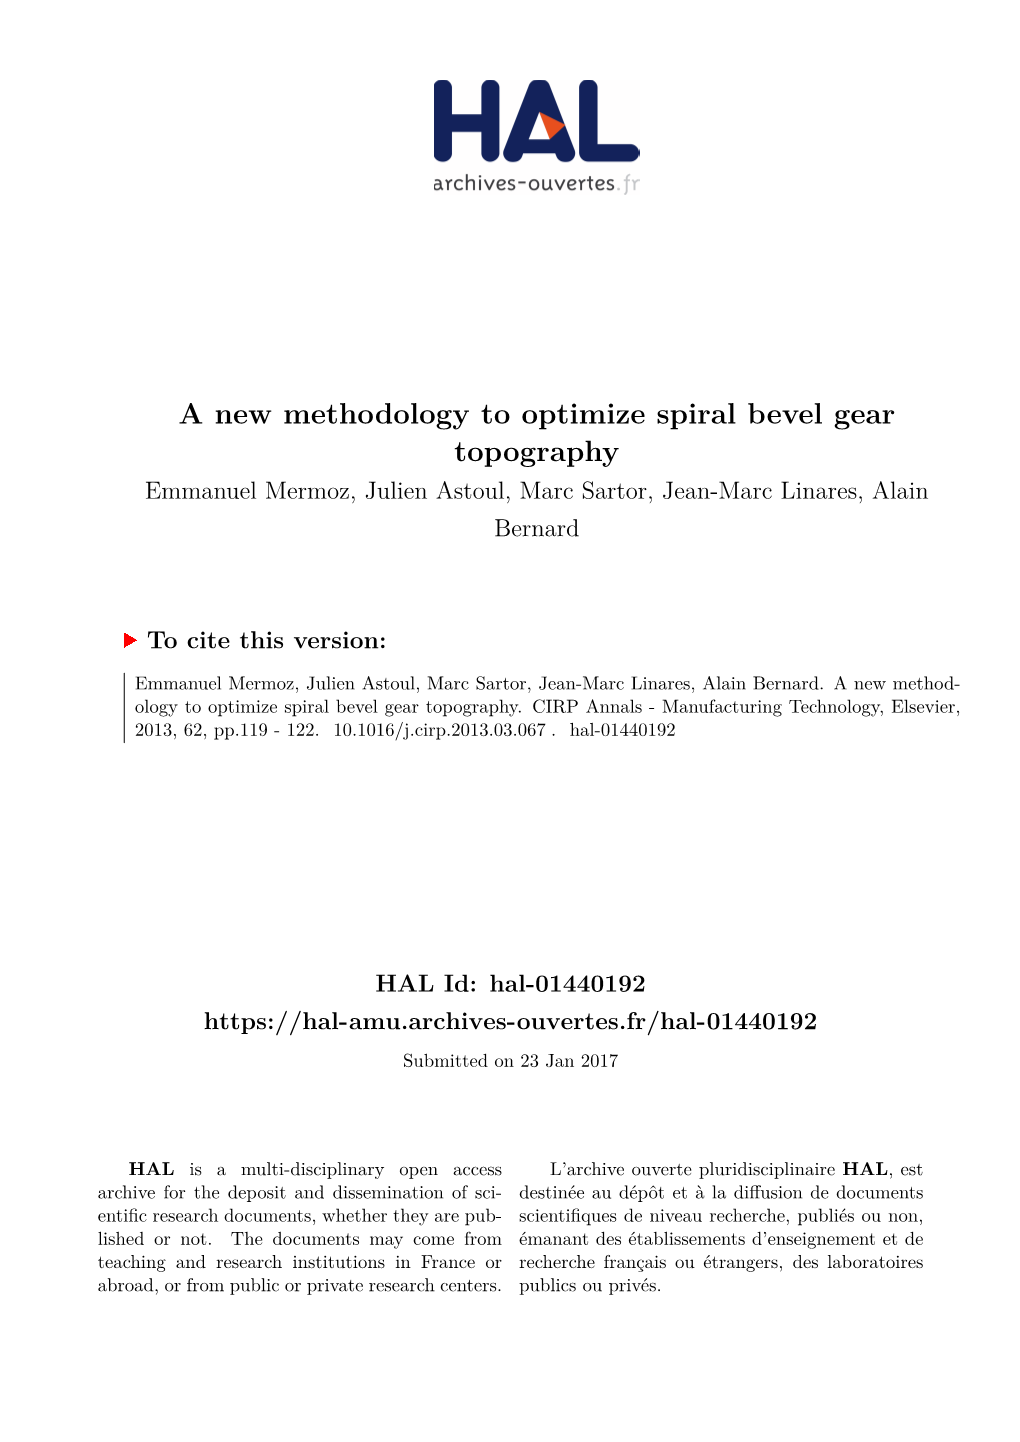 A New Methodology to Optimize Spiral Bevel Gear Topography Emmanuel Mermoz, Julien Astoul, Marc Sartor, Jean-Marc Linares, Alain Bernard